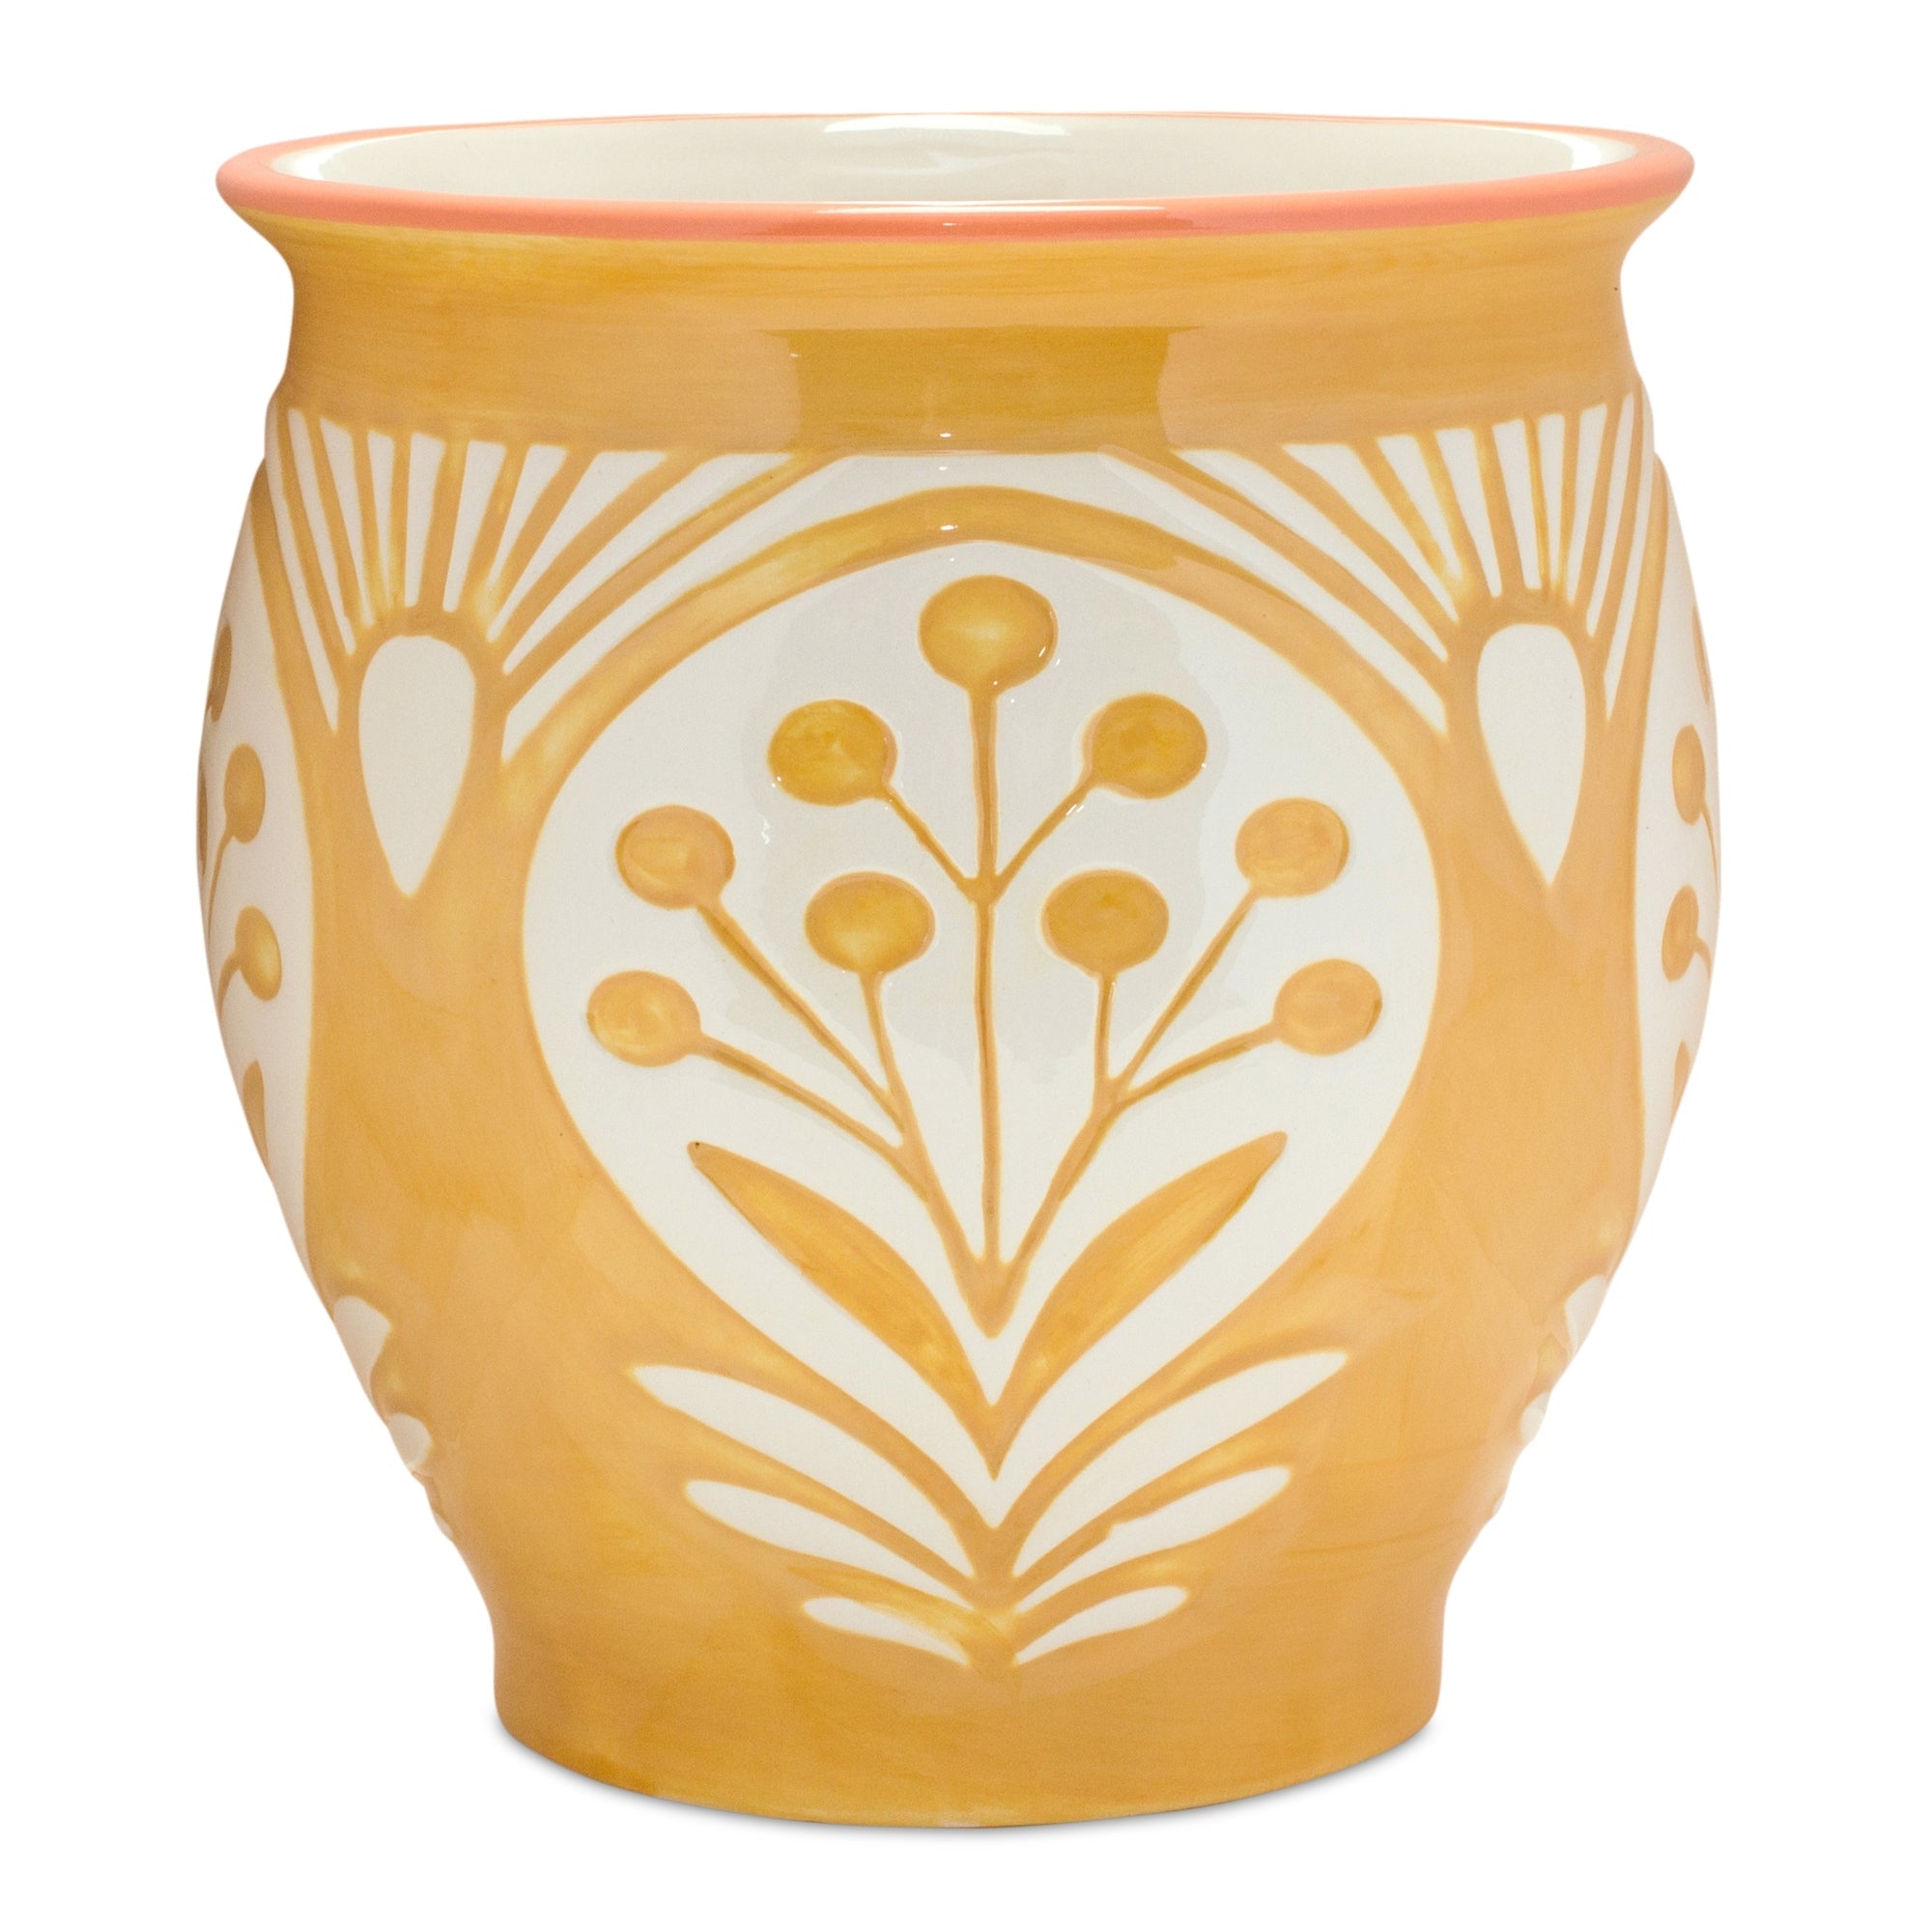 Decorative Ceramic Pot (Set of 2) - Pier 1